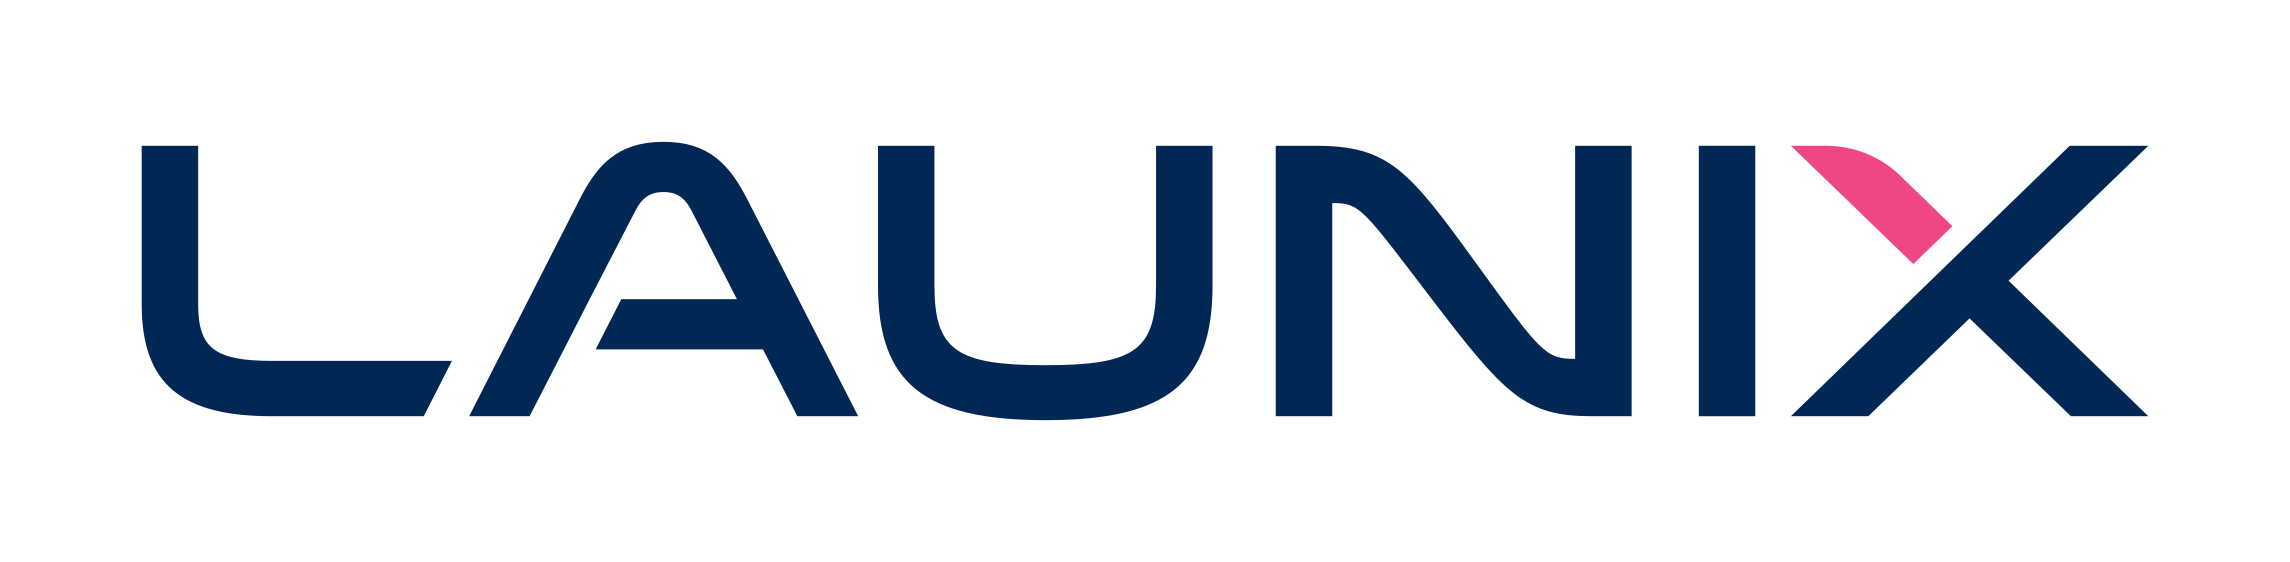 Launix_Logo